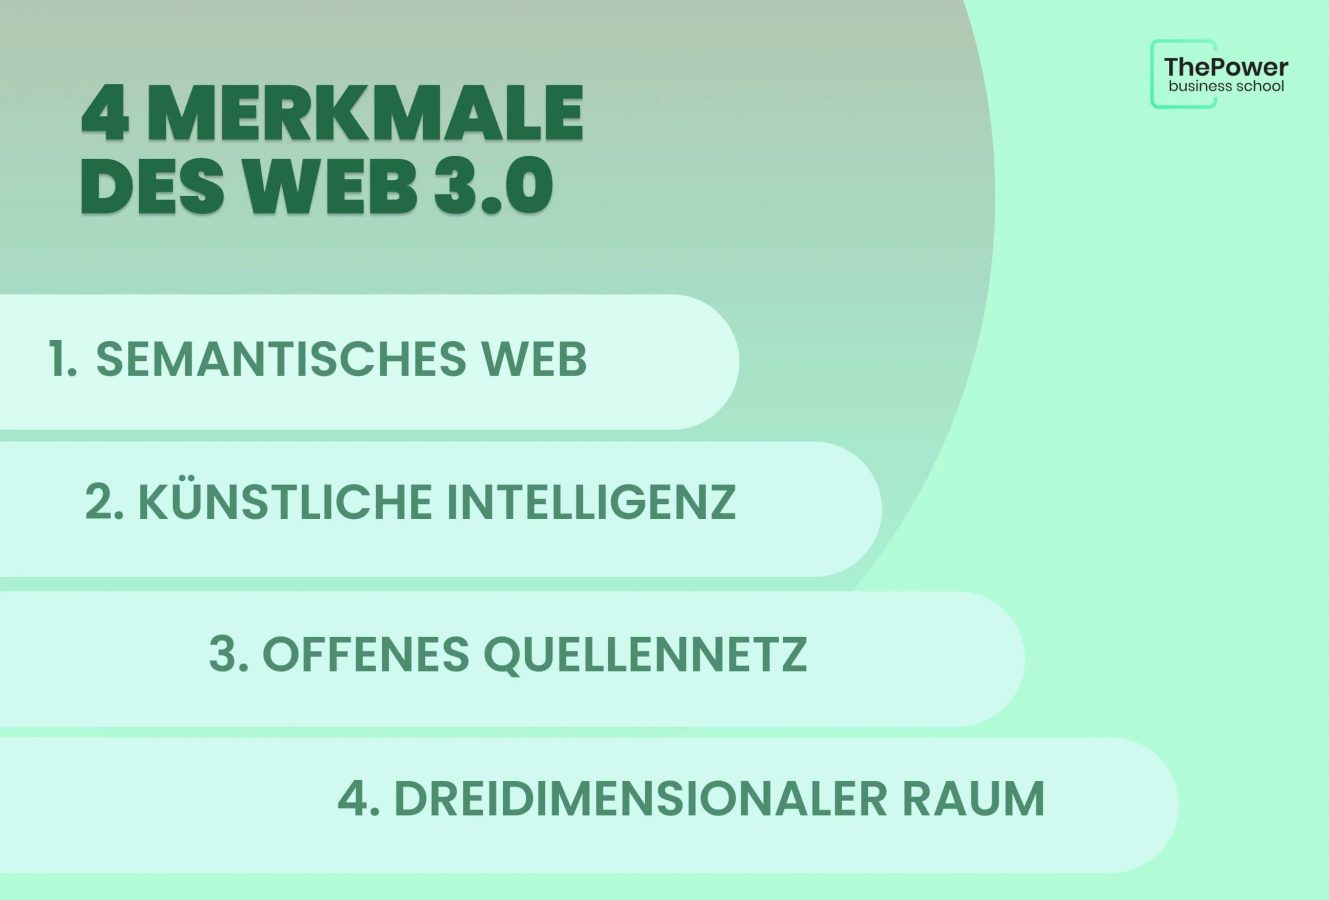 Merkmale des Web 3.0